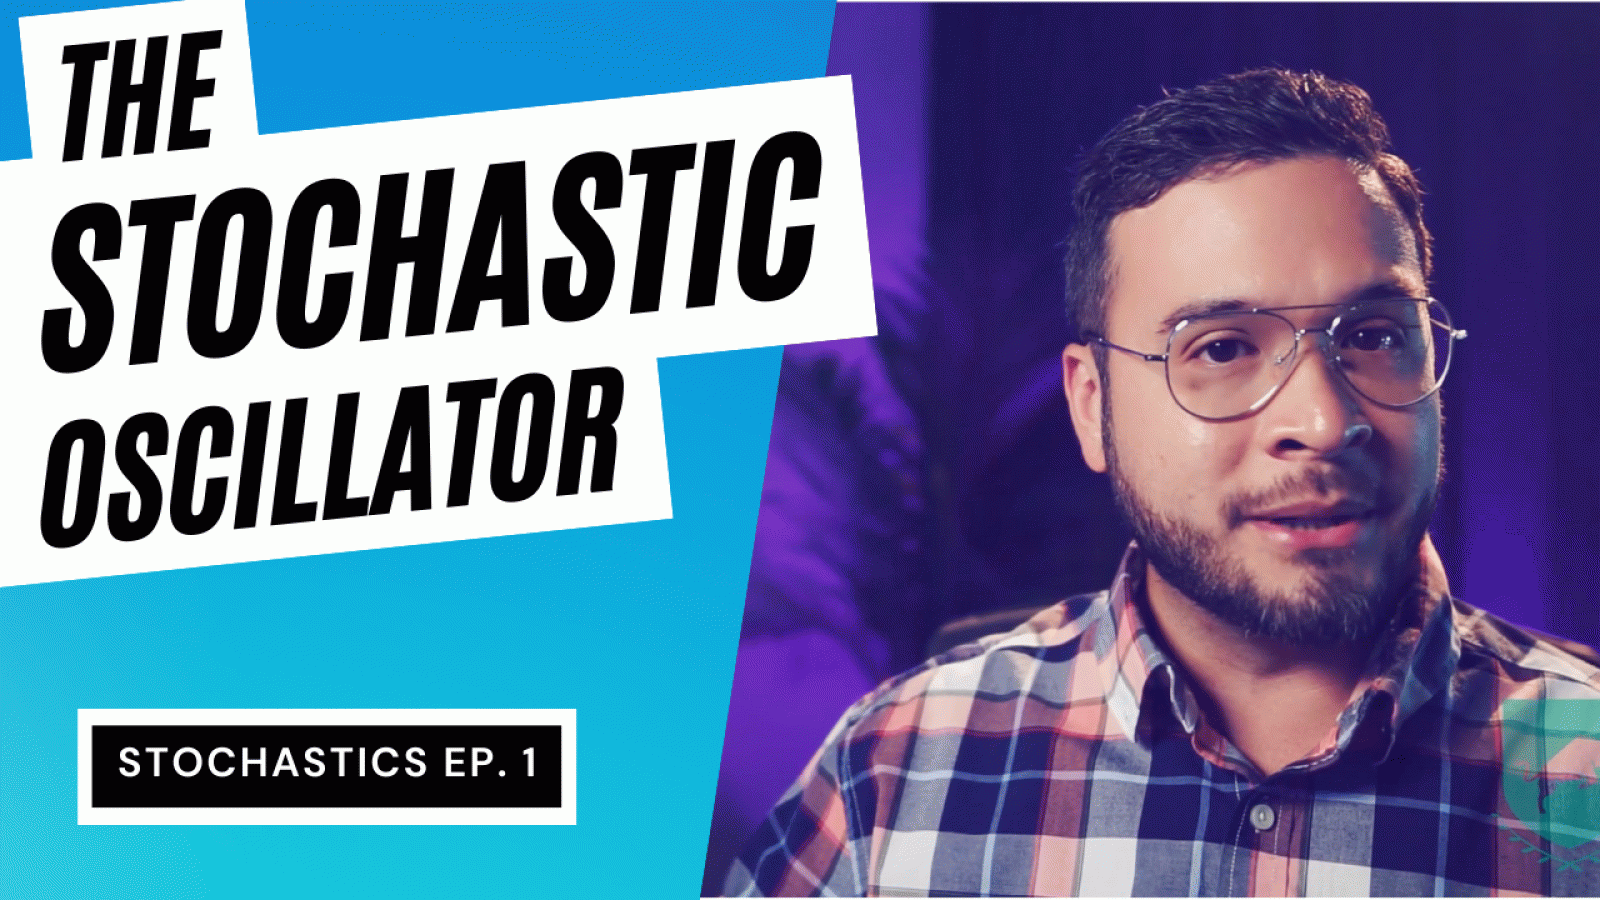 Stochastics Episode 1 The Stochastic Oscillator